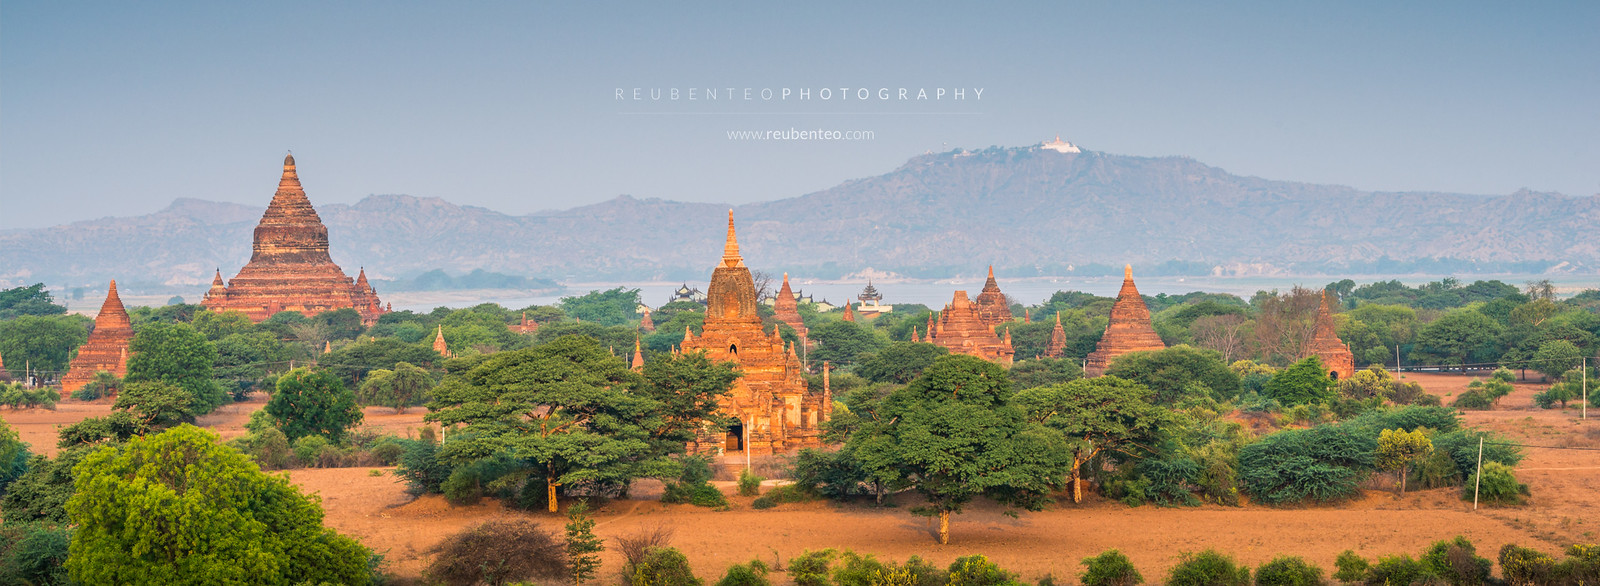 Bagan in the morning